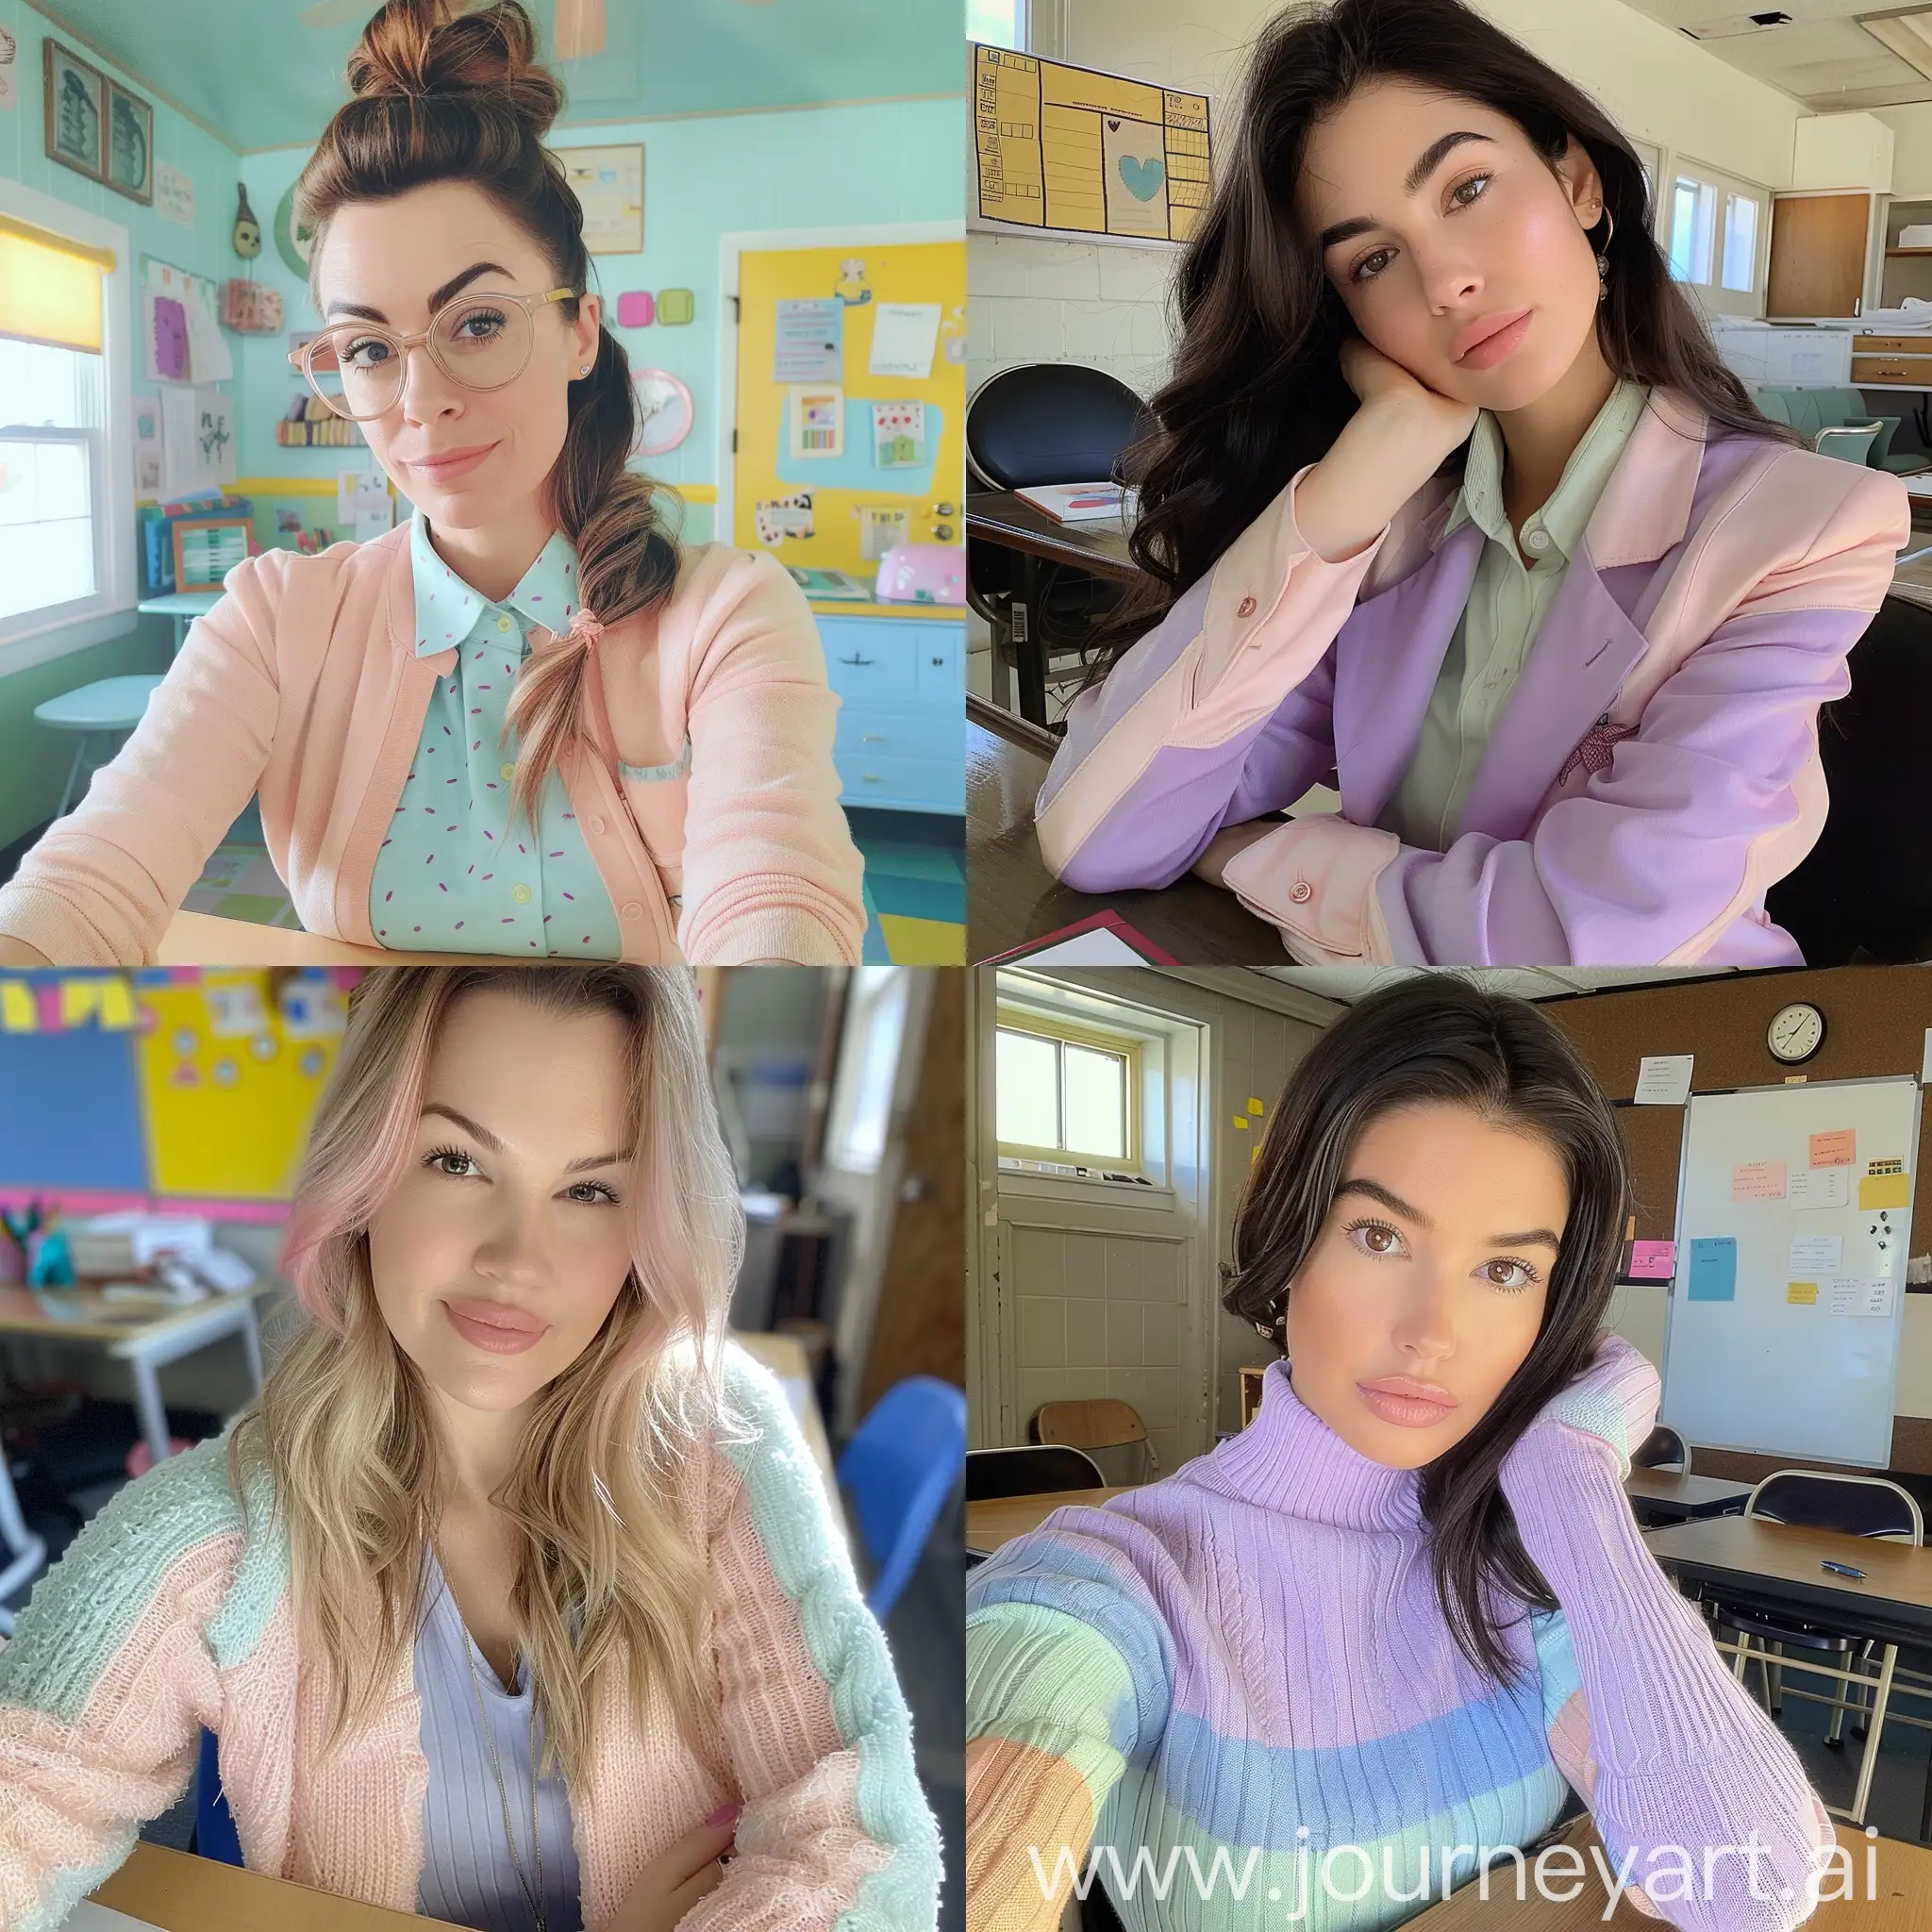 Aesthetic instagram: Selfie of a Elementary School teacher, at desk, woman, super model, mid 30's, pastel clothing color tones--ar 9:16